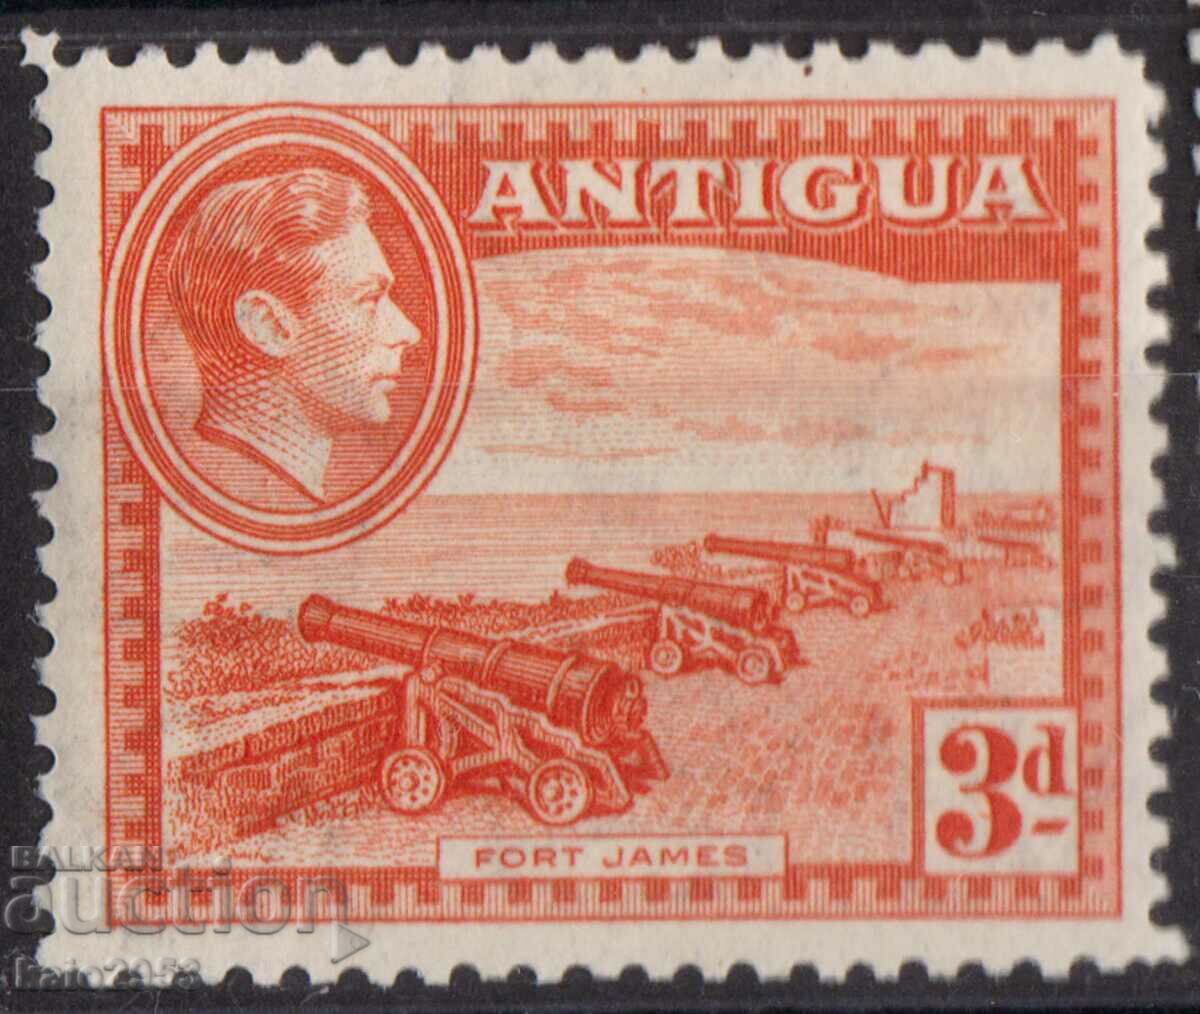 GB/Antigua-1938-KG VI-овал+изгледи,MNH